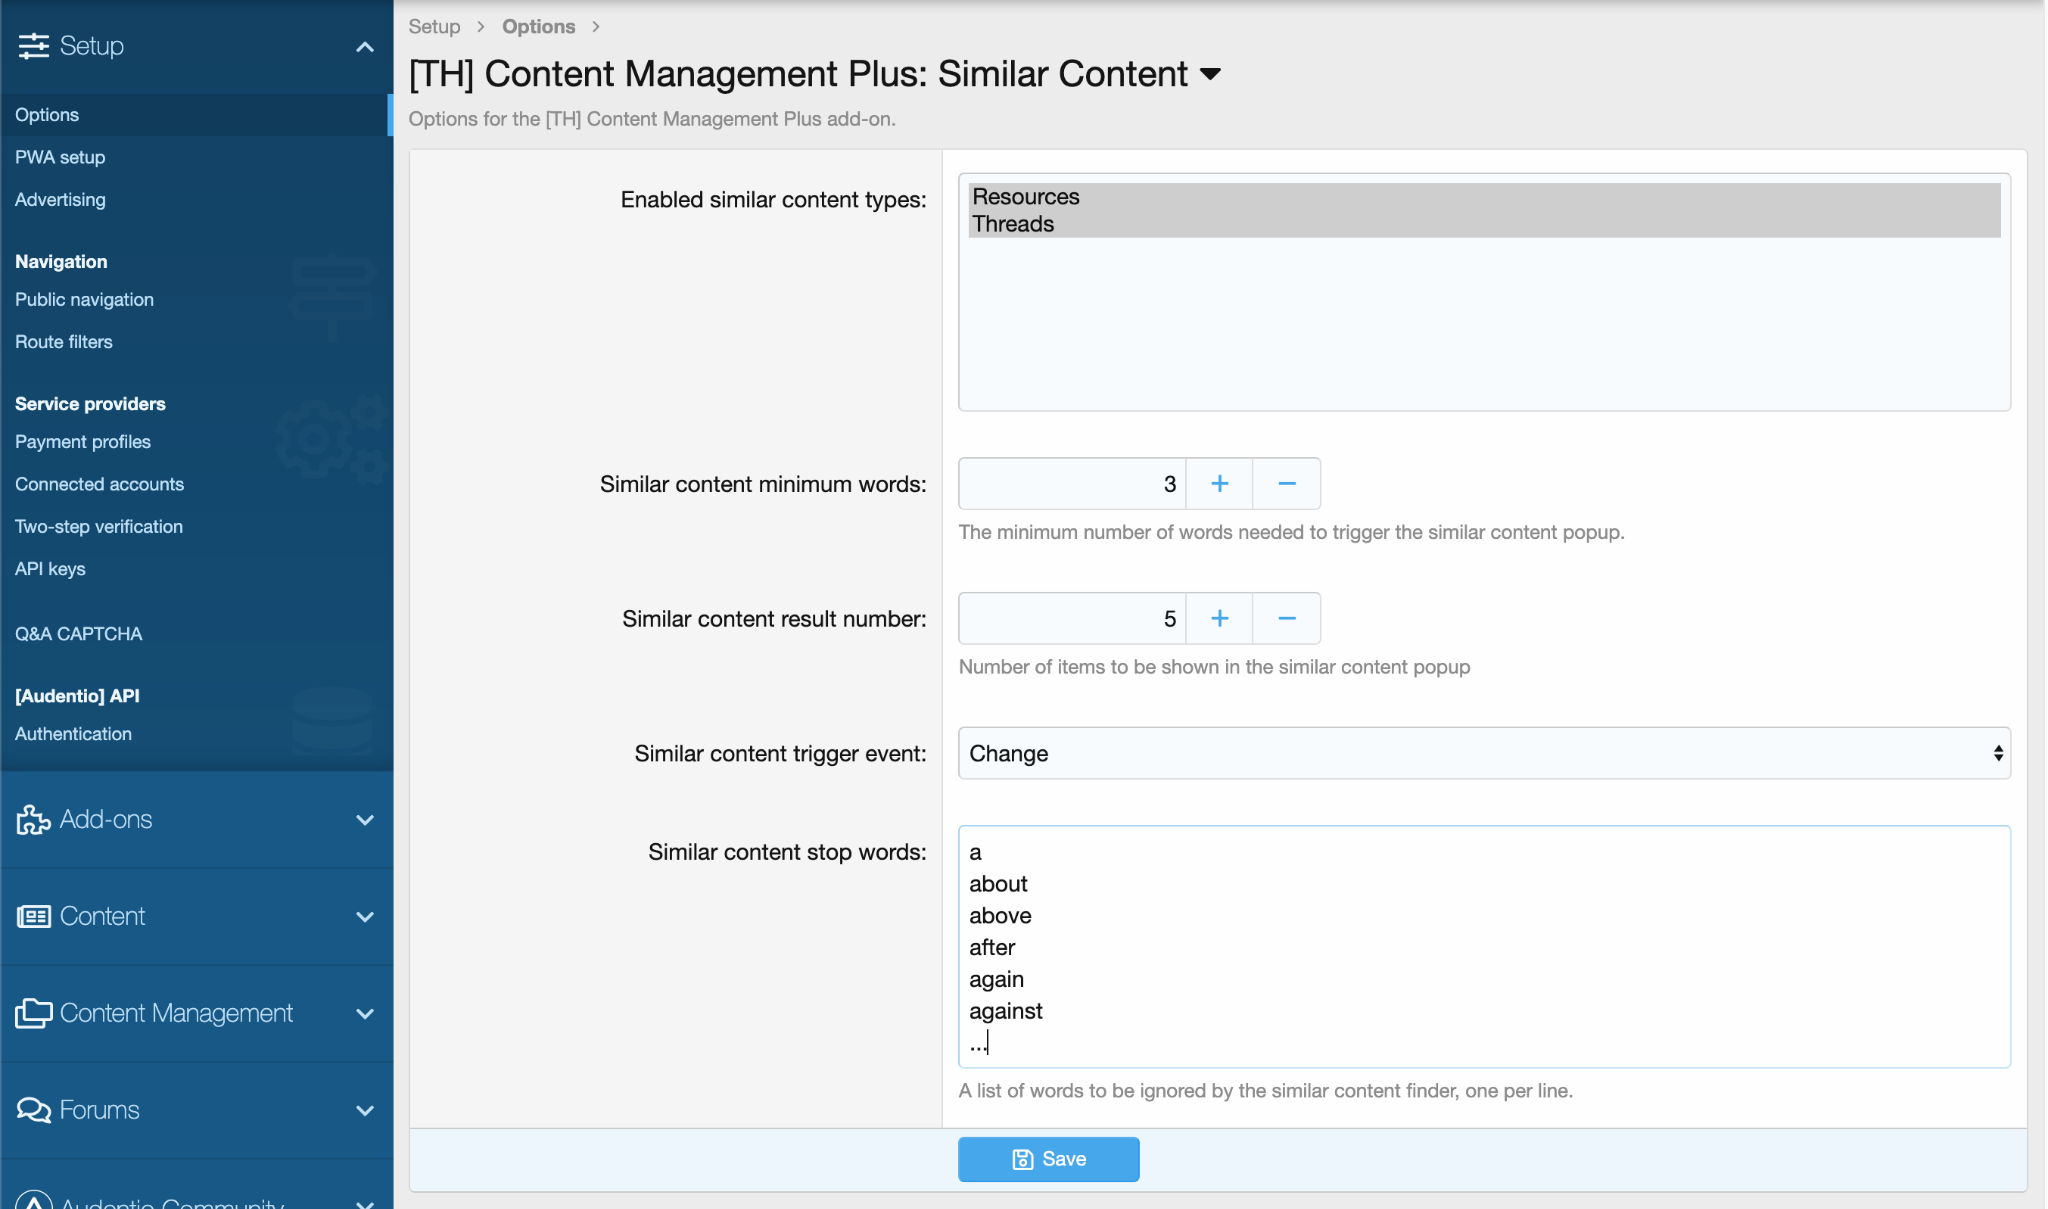  Viewing similar content options of Content Management Plus 